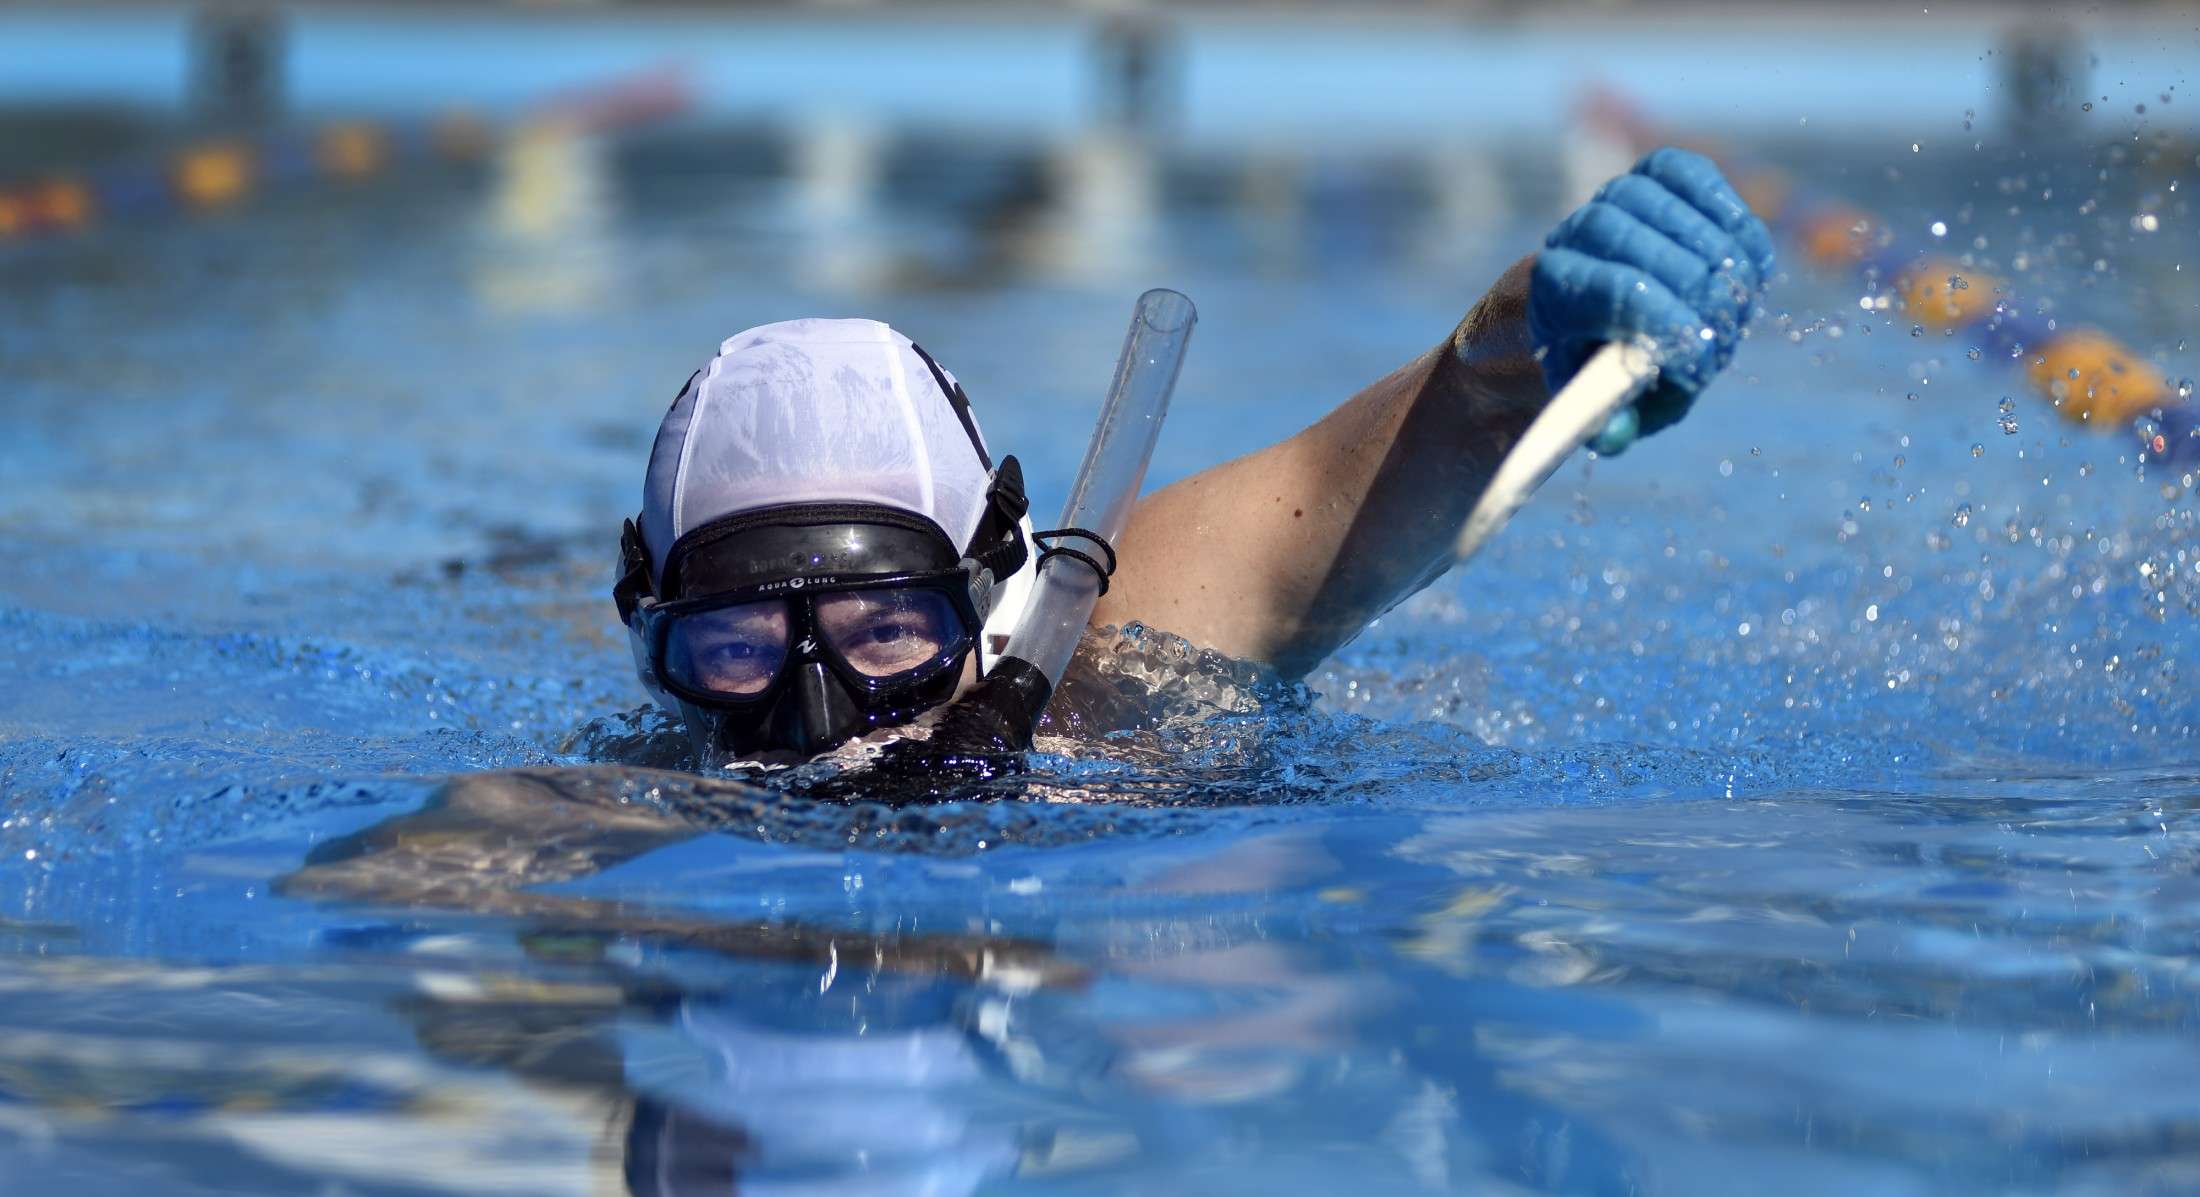 Underwater Hockey - How to get involved - Titan Sports - Tauranga Boys